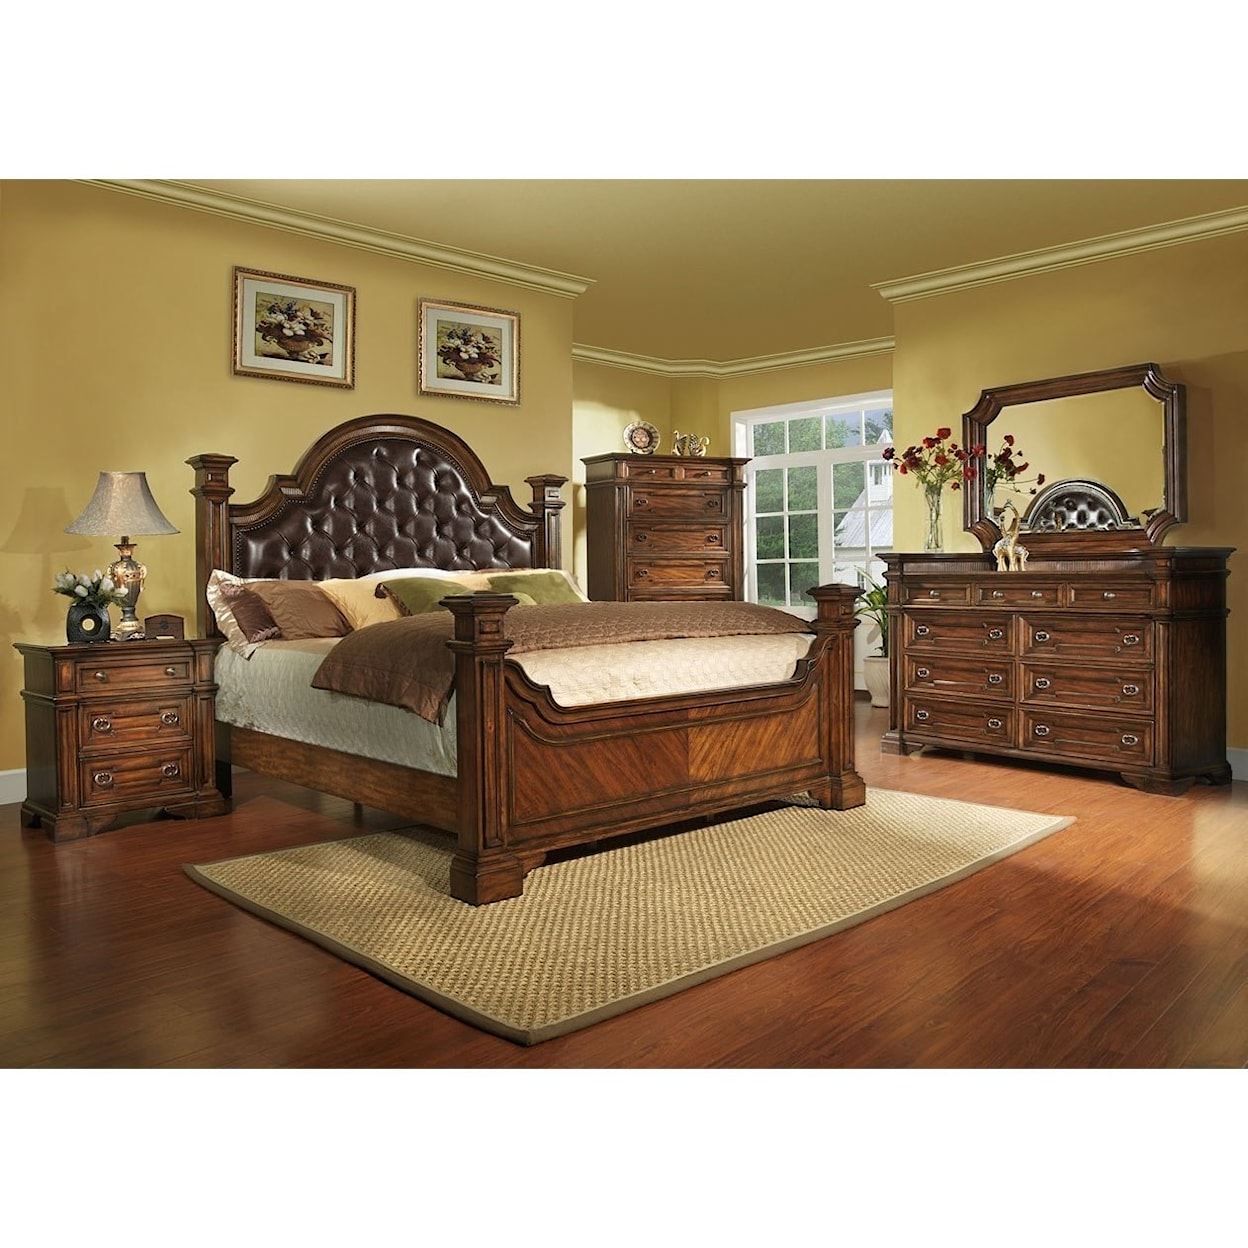 Avalon Furniture Highland Ridge King Bedroom Group